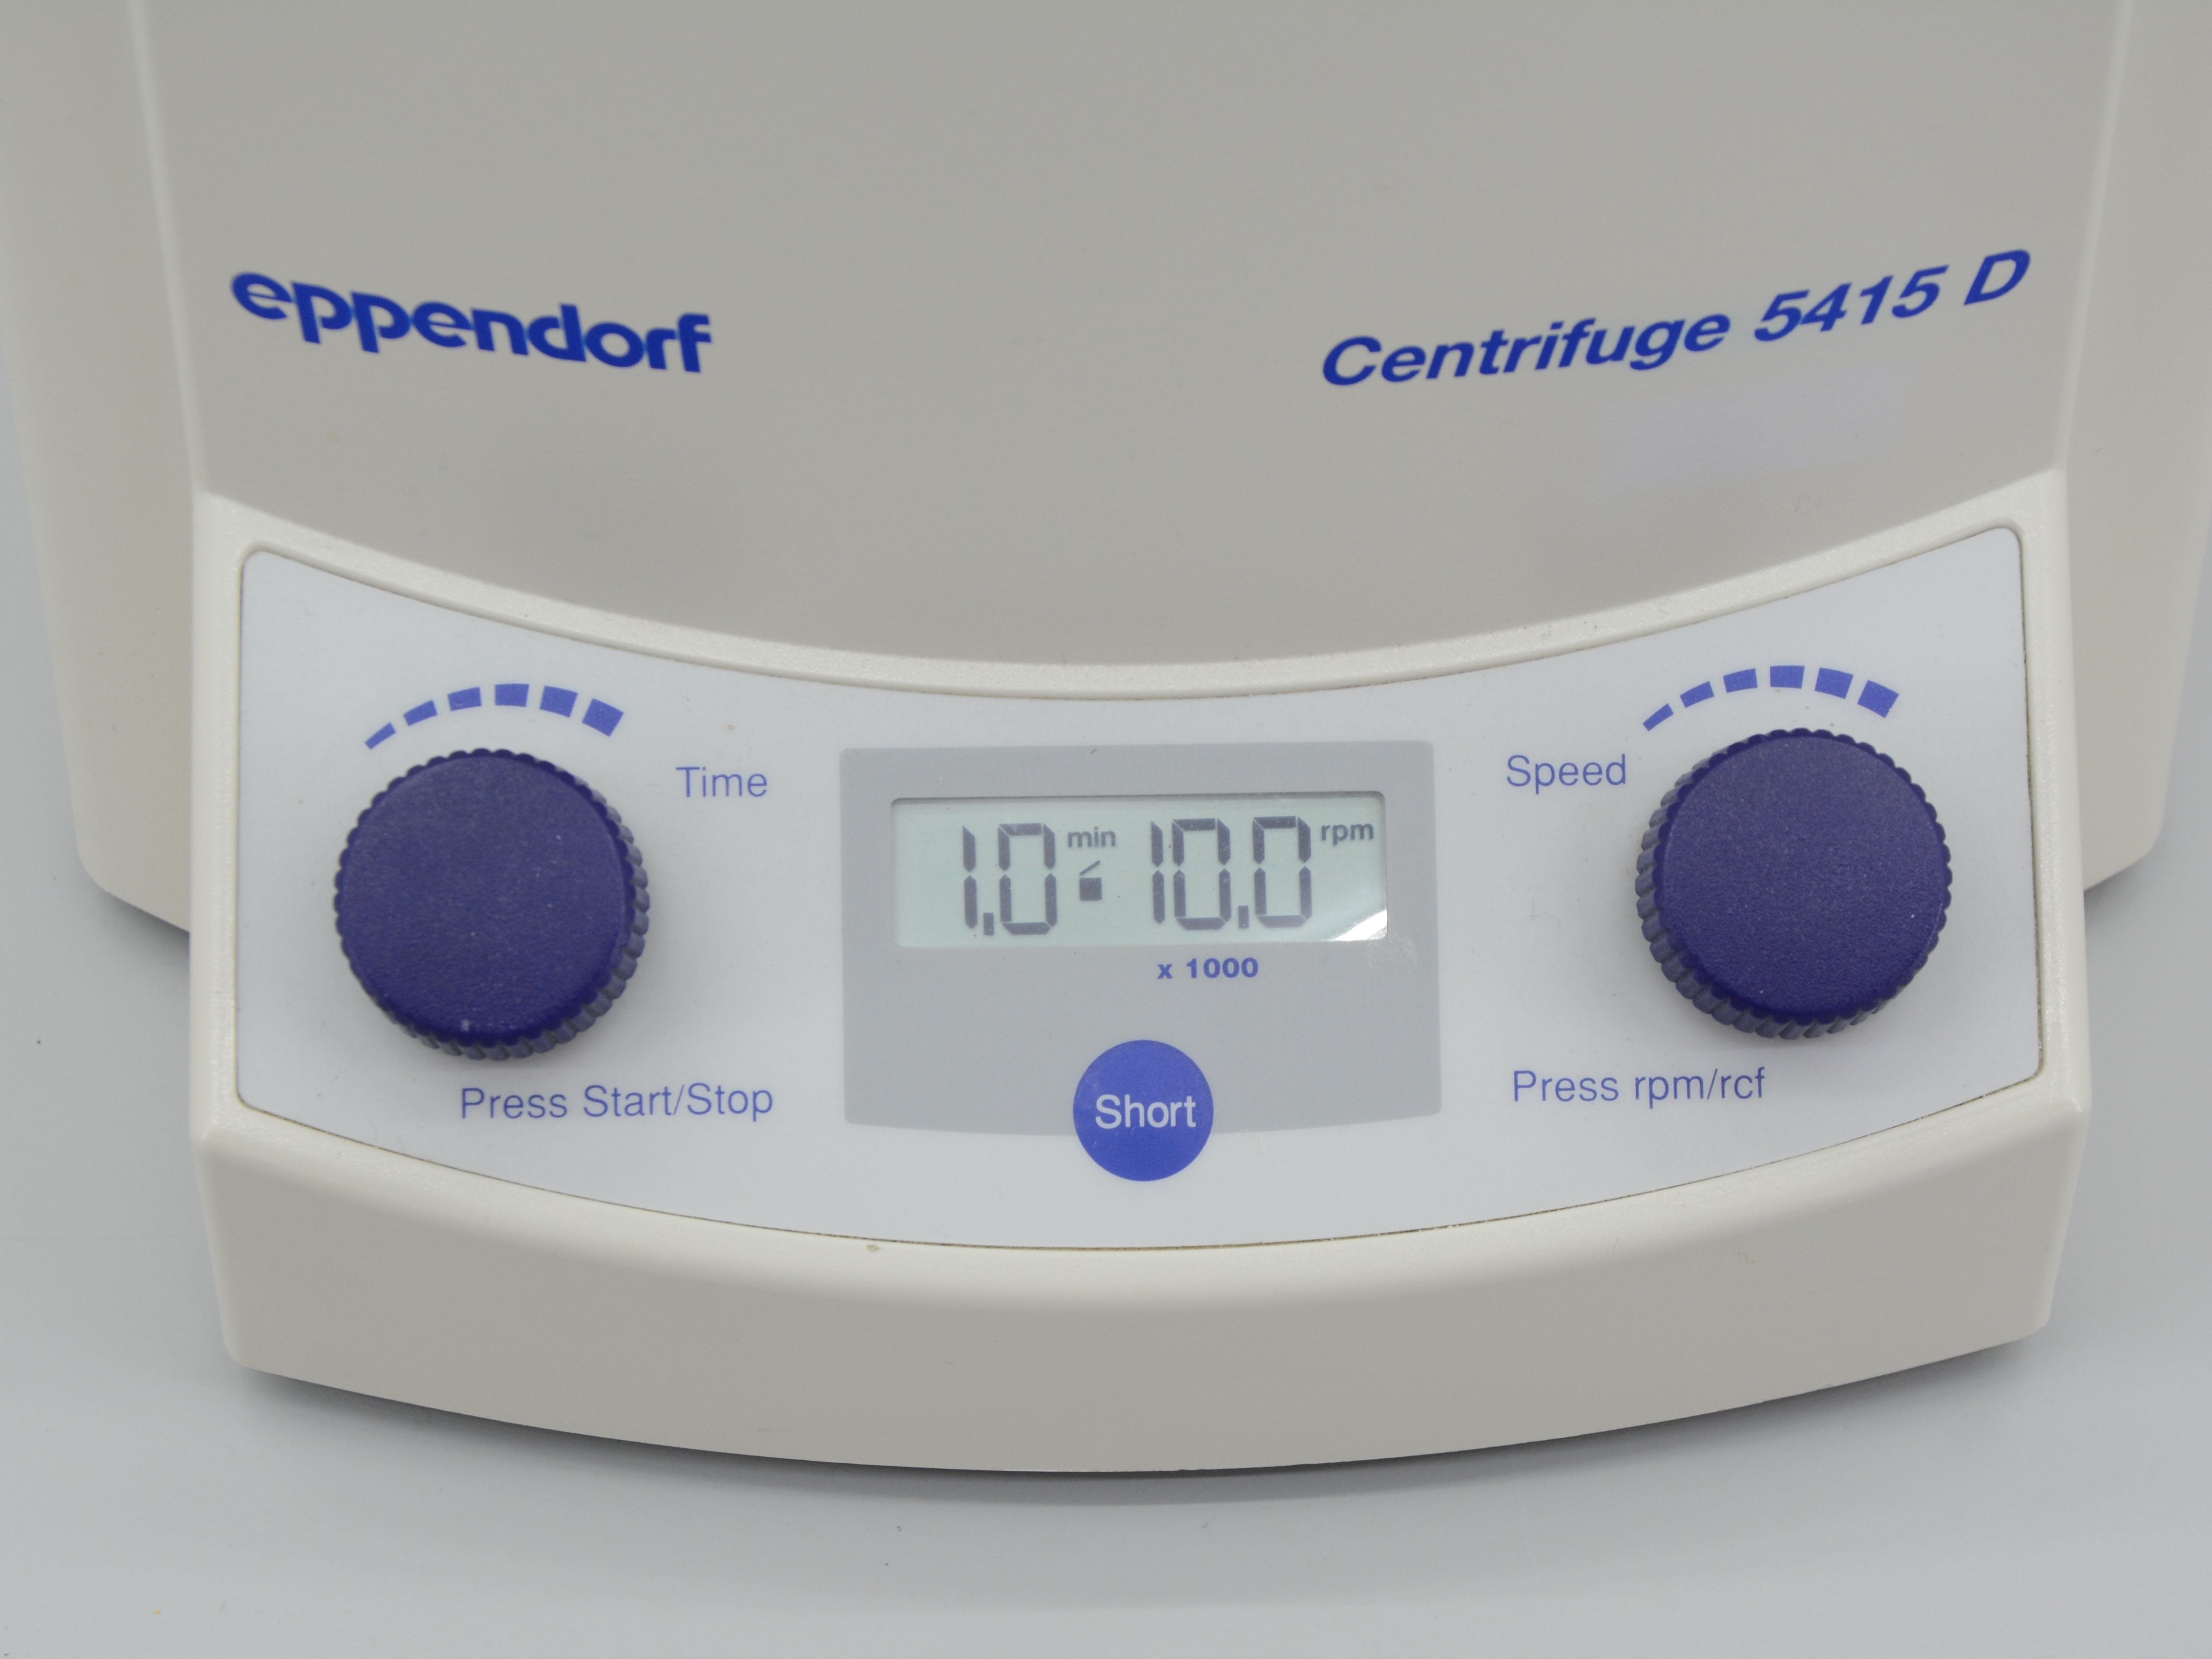 Eppendorf centrifuge 5415 r service manual